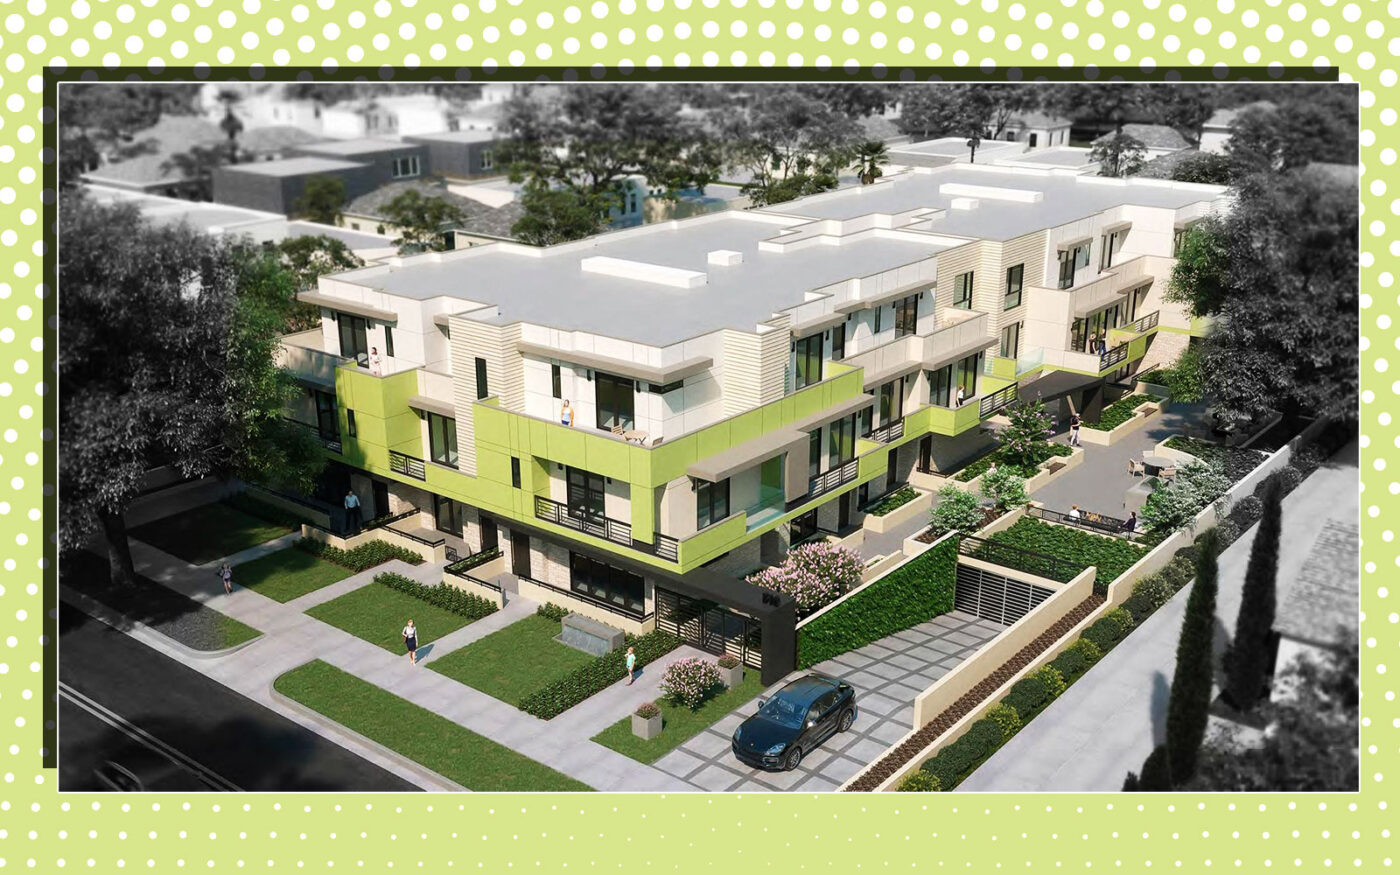 RAFA LA Development eyes 32-unit apartment Building in Pasadena